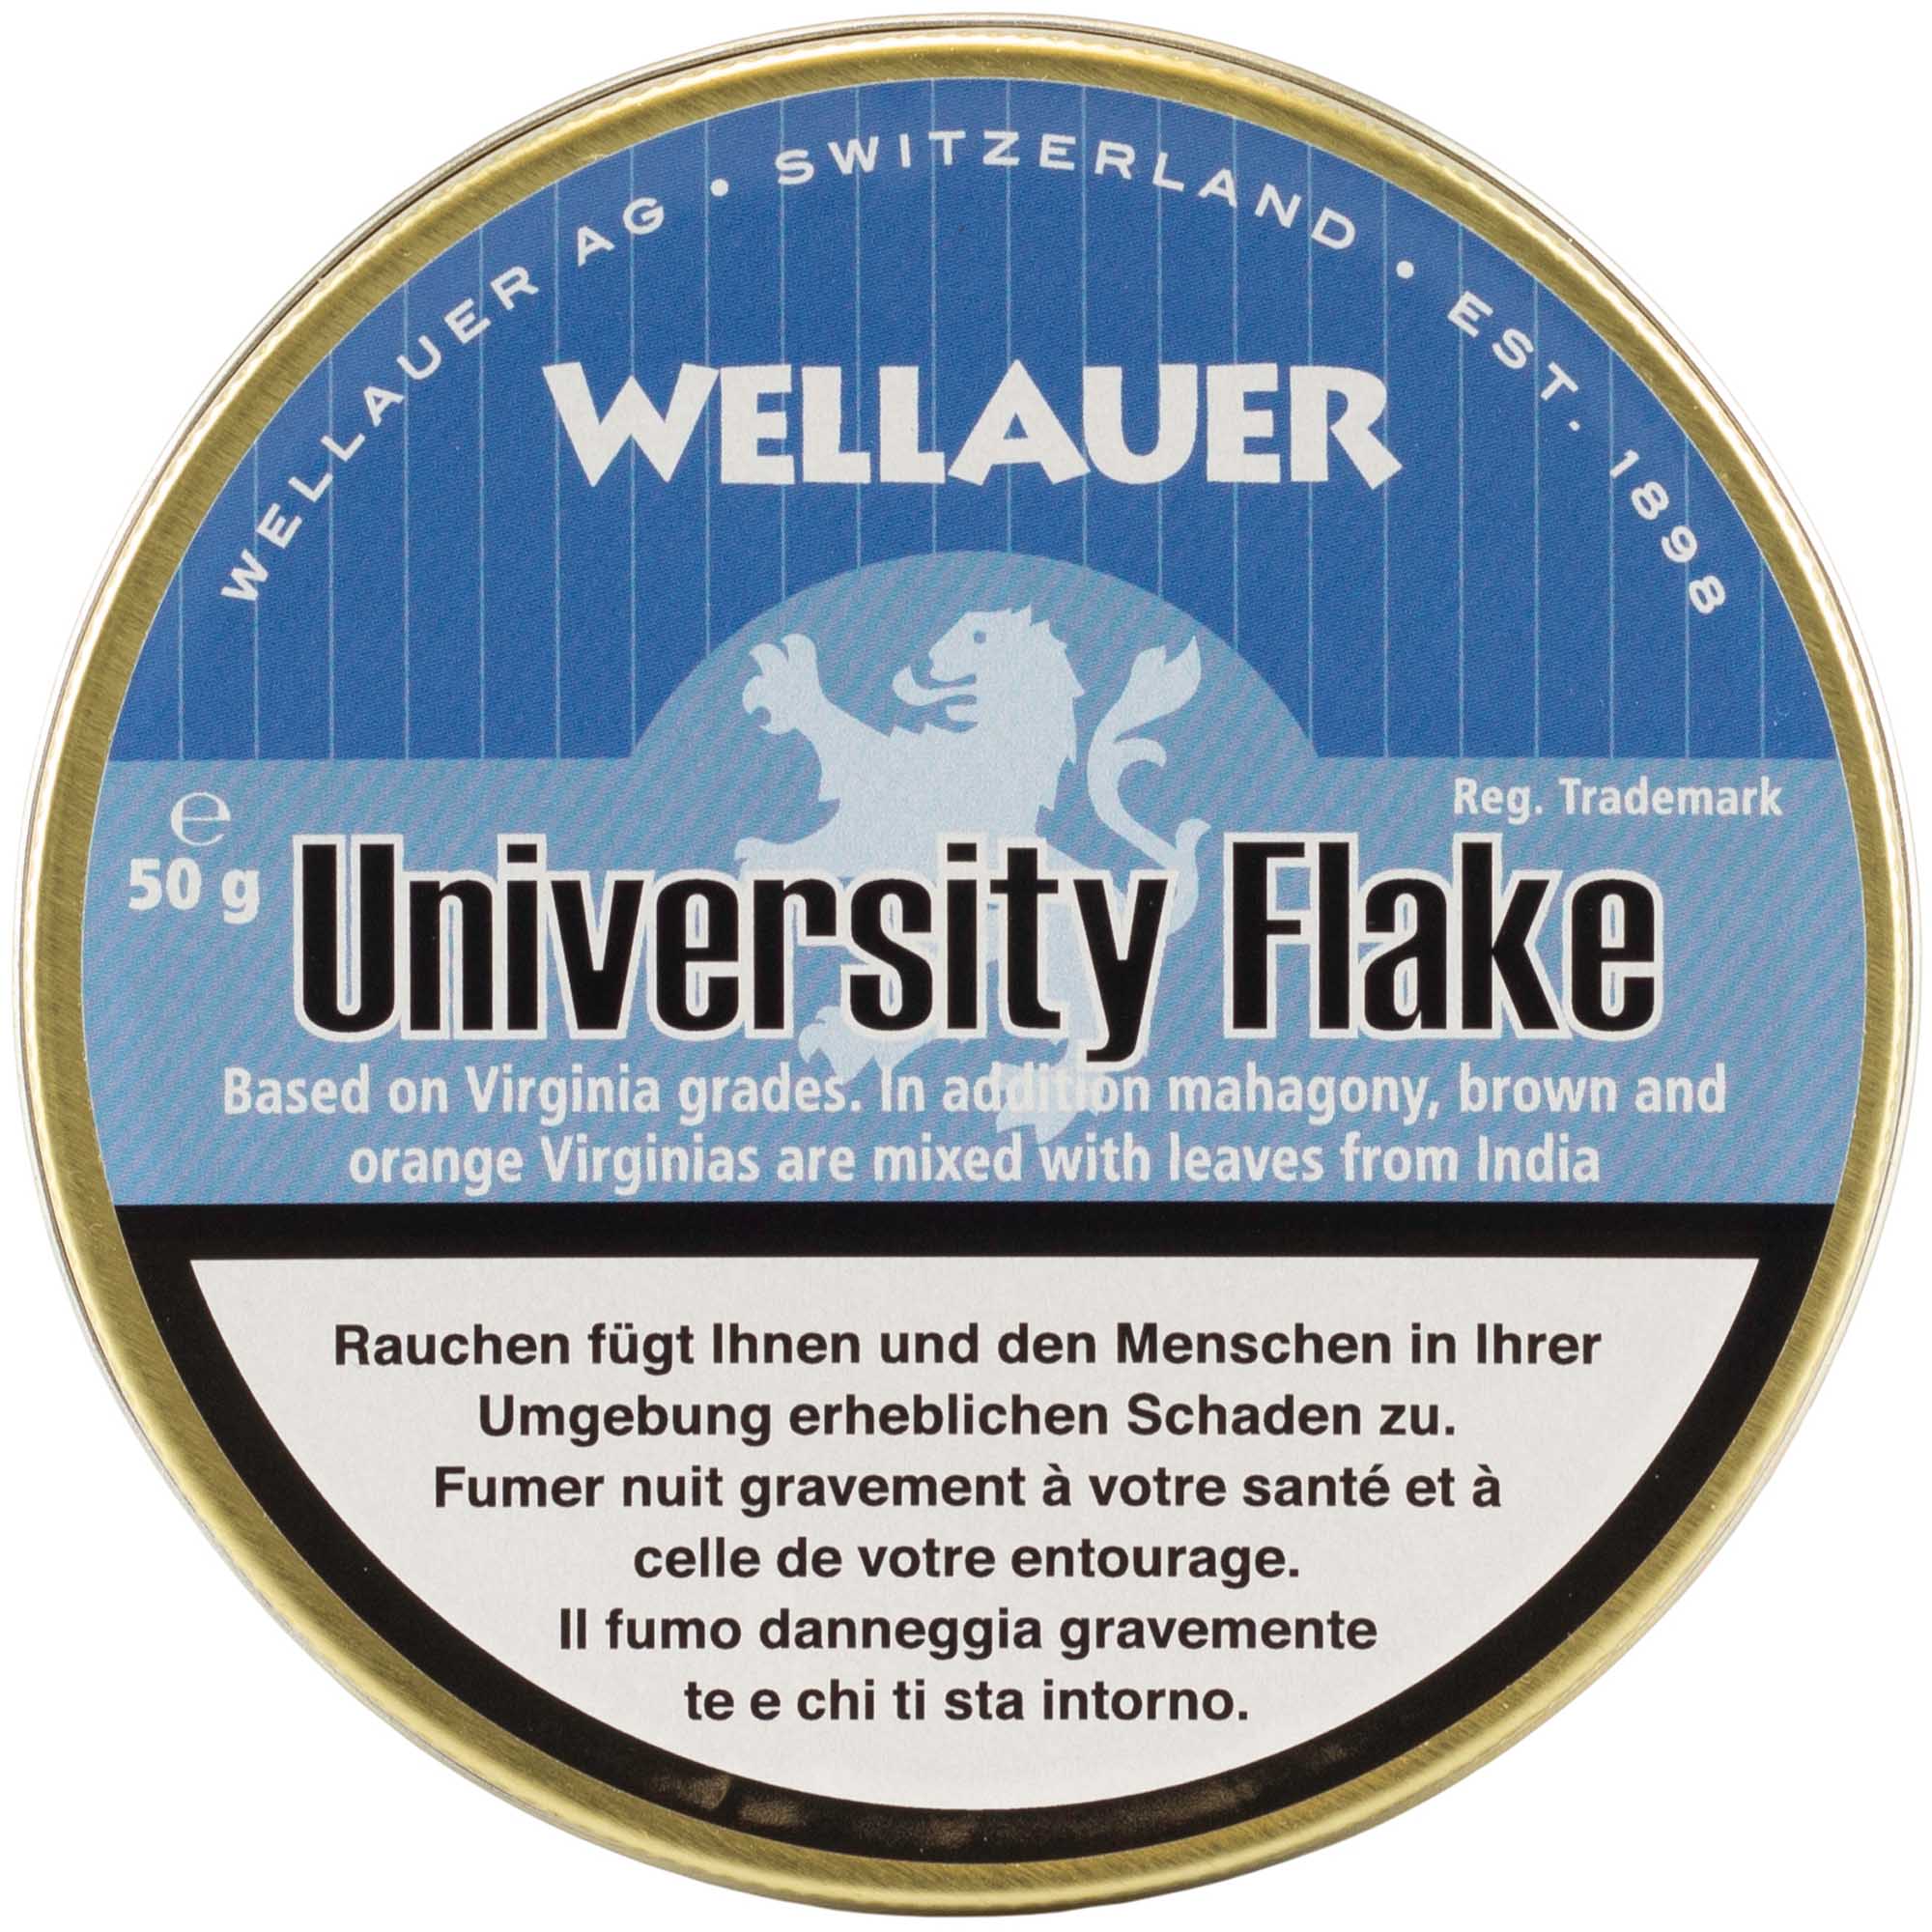 Wellauer's Pfeifentabak University Flake - 50g Tin